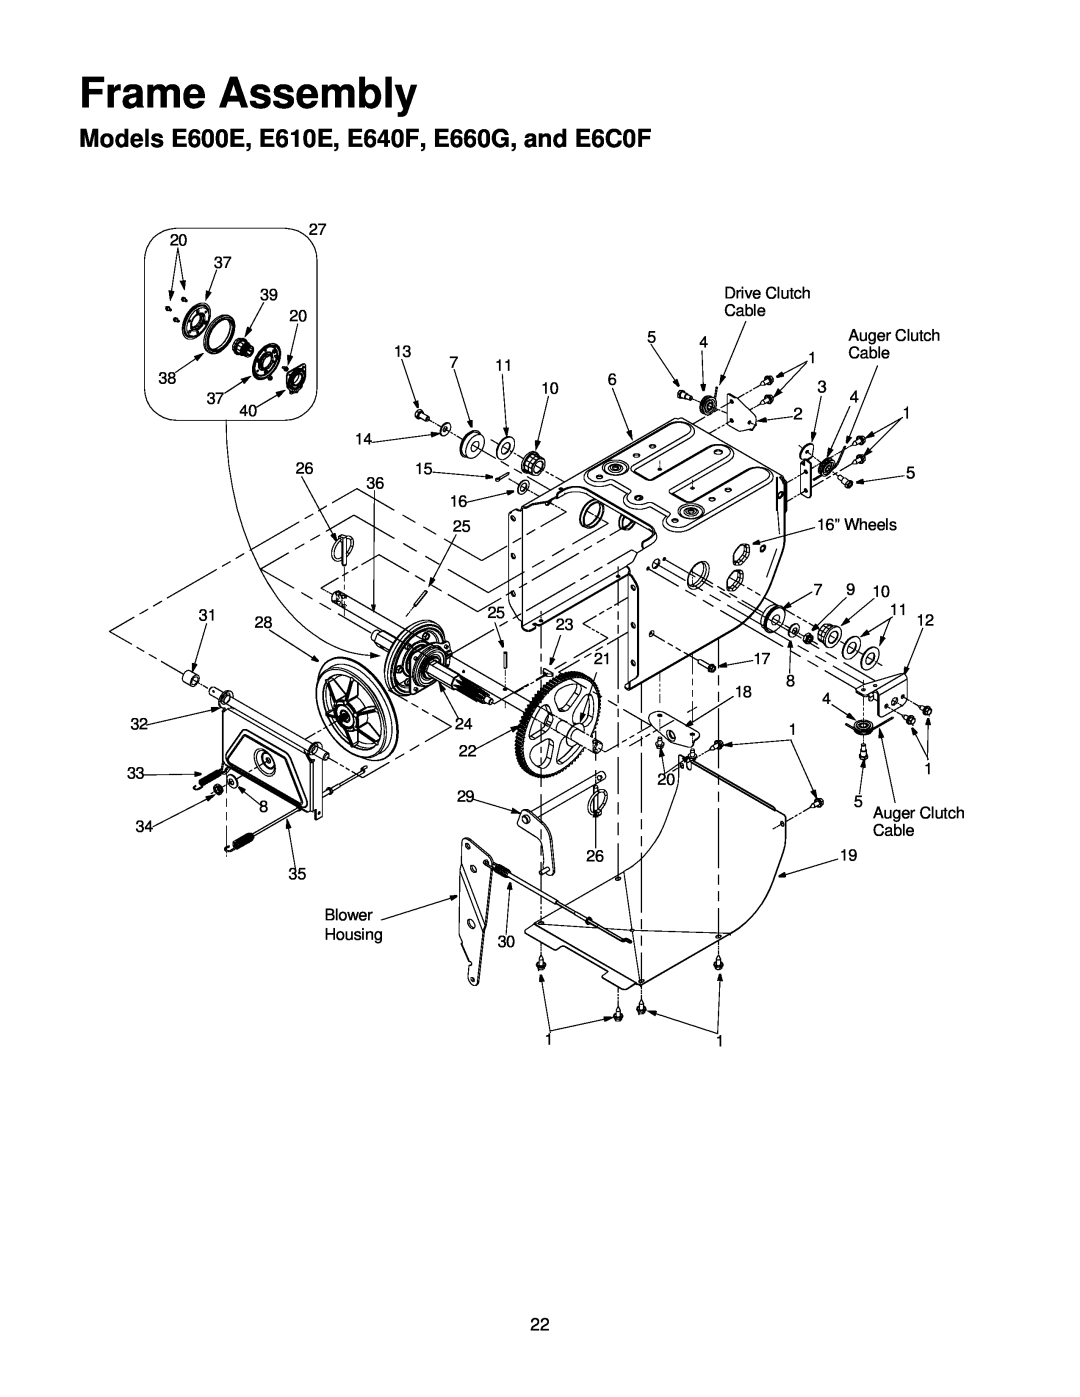 Yard Machines manual Frame Assembly, Models E600E, E610E, E640F, E660G, and E6C0F, Auger Clutch Cable 